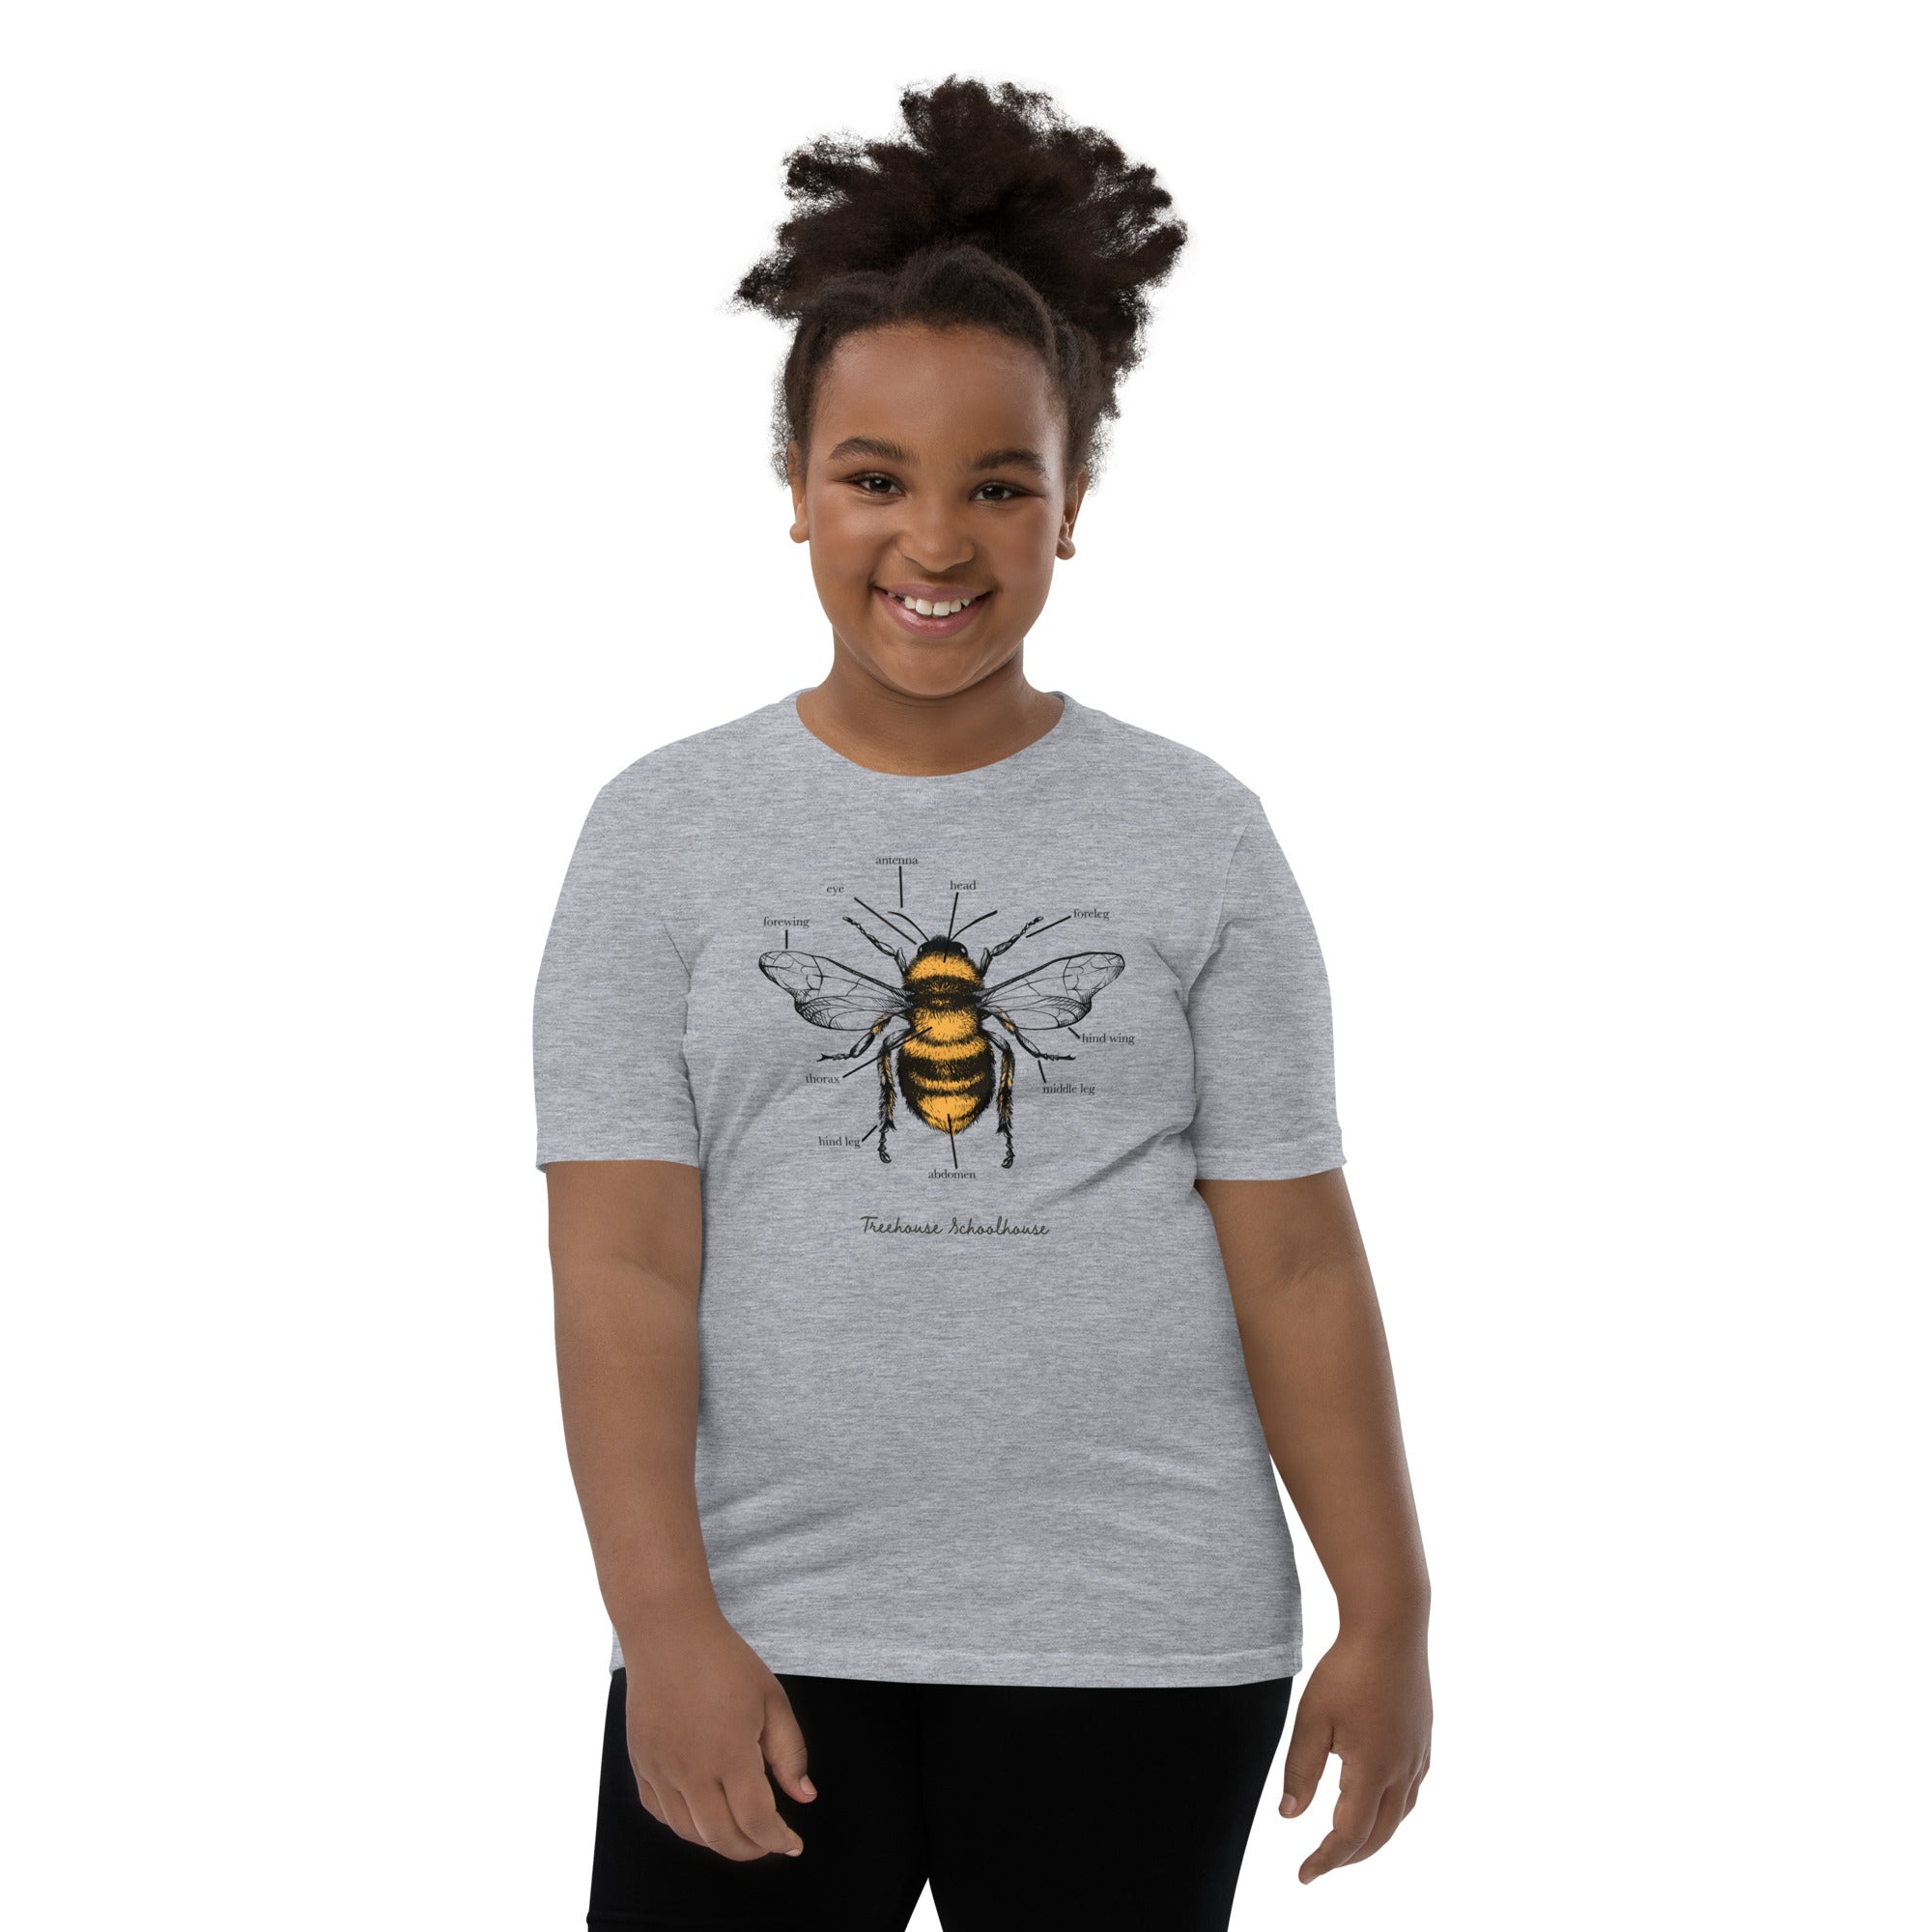 Youth Bee Anatomy T-Shirt